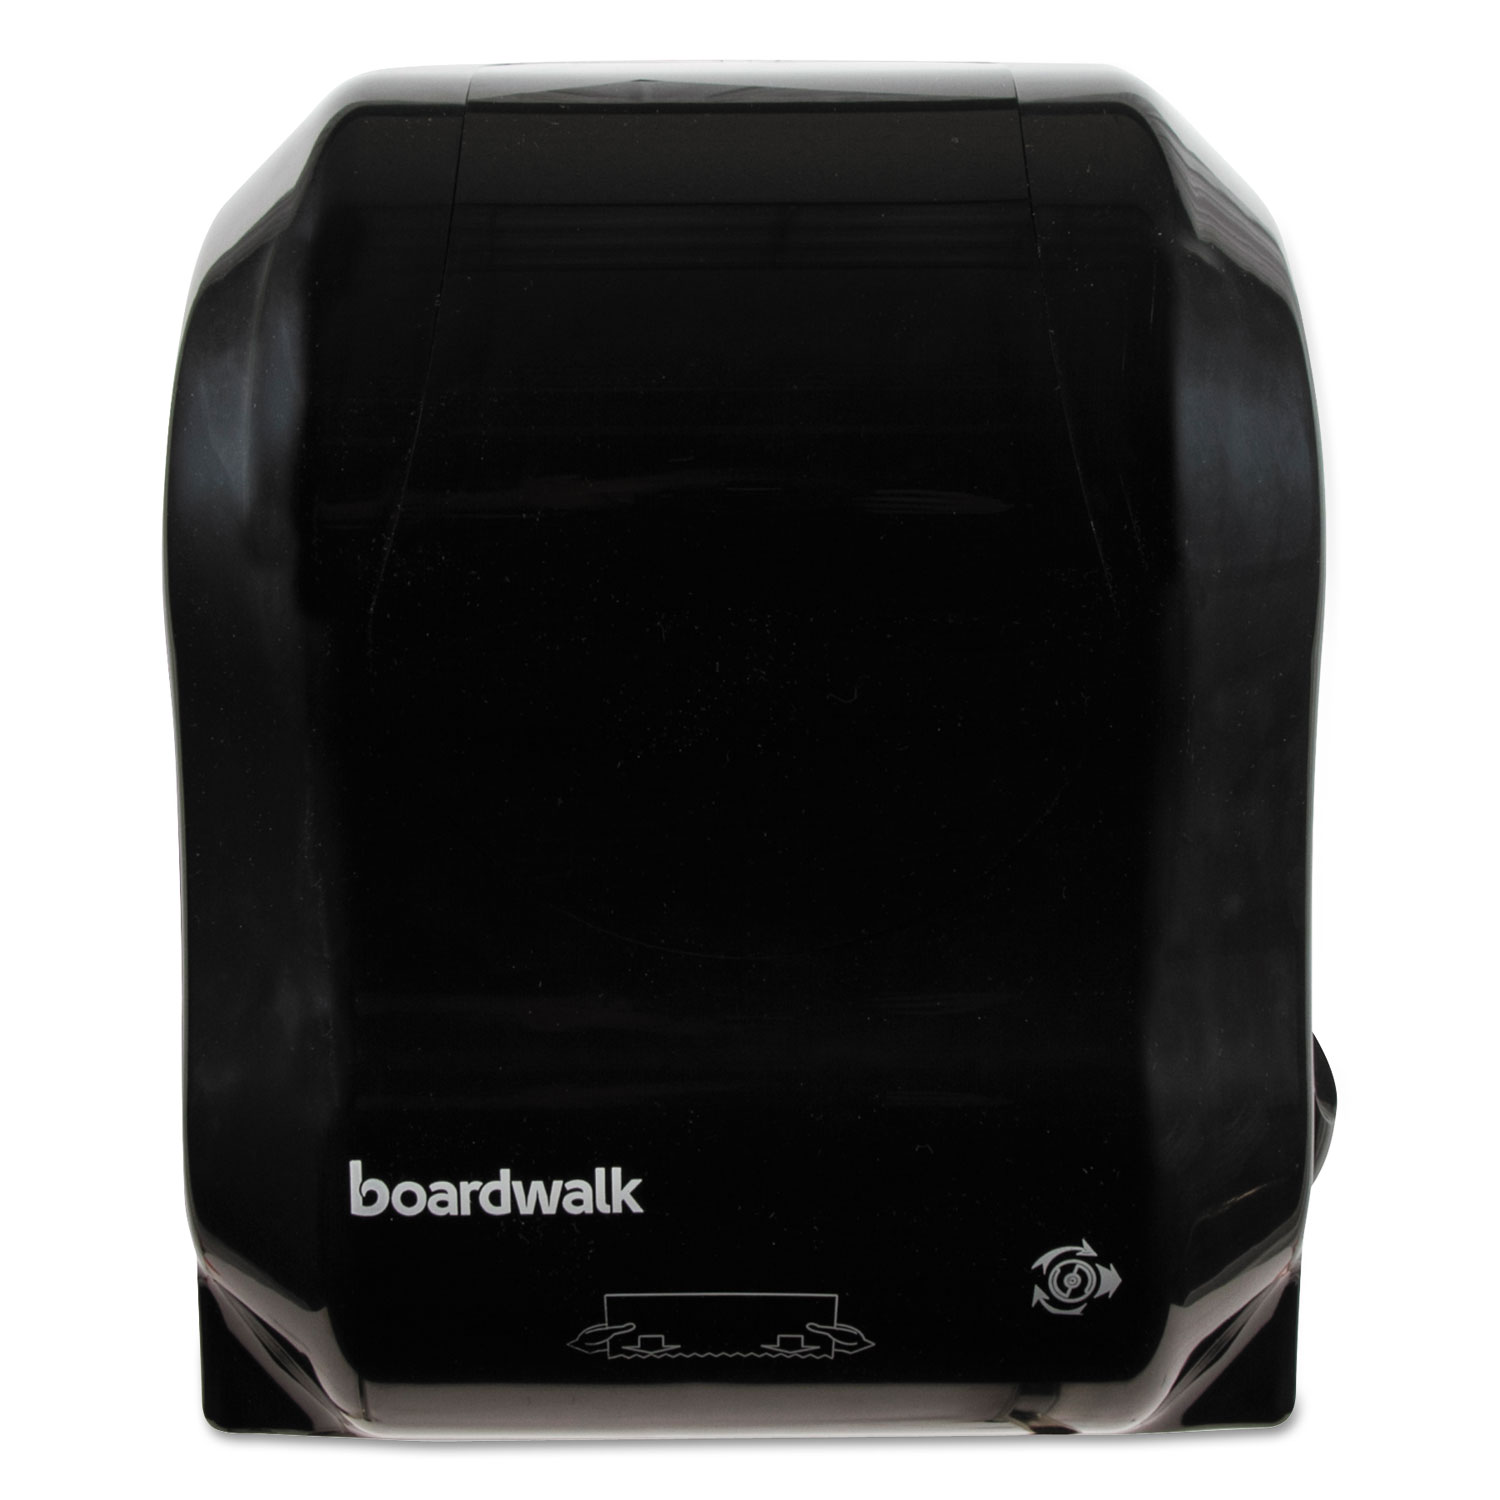  Boardwalk T7470BKBW Hands Free Mechanical Towel Dispenser, 13 1/4 x 16 1/4 x 10 1/4, Black (BWK1501) 